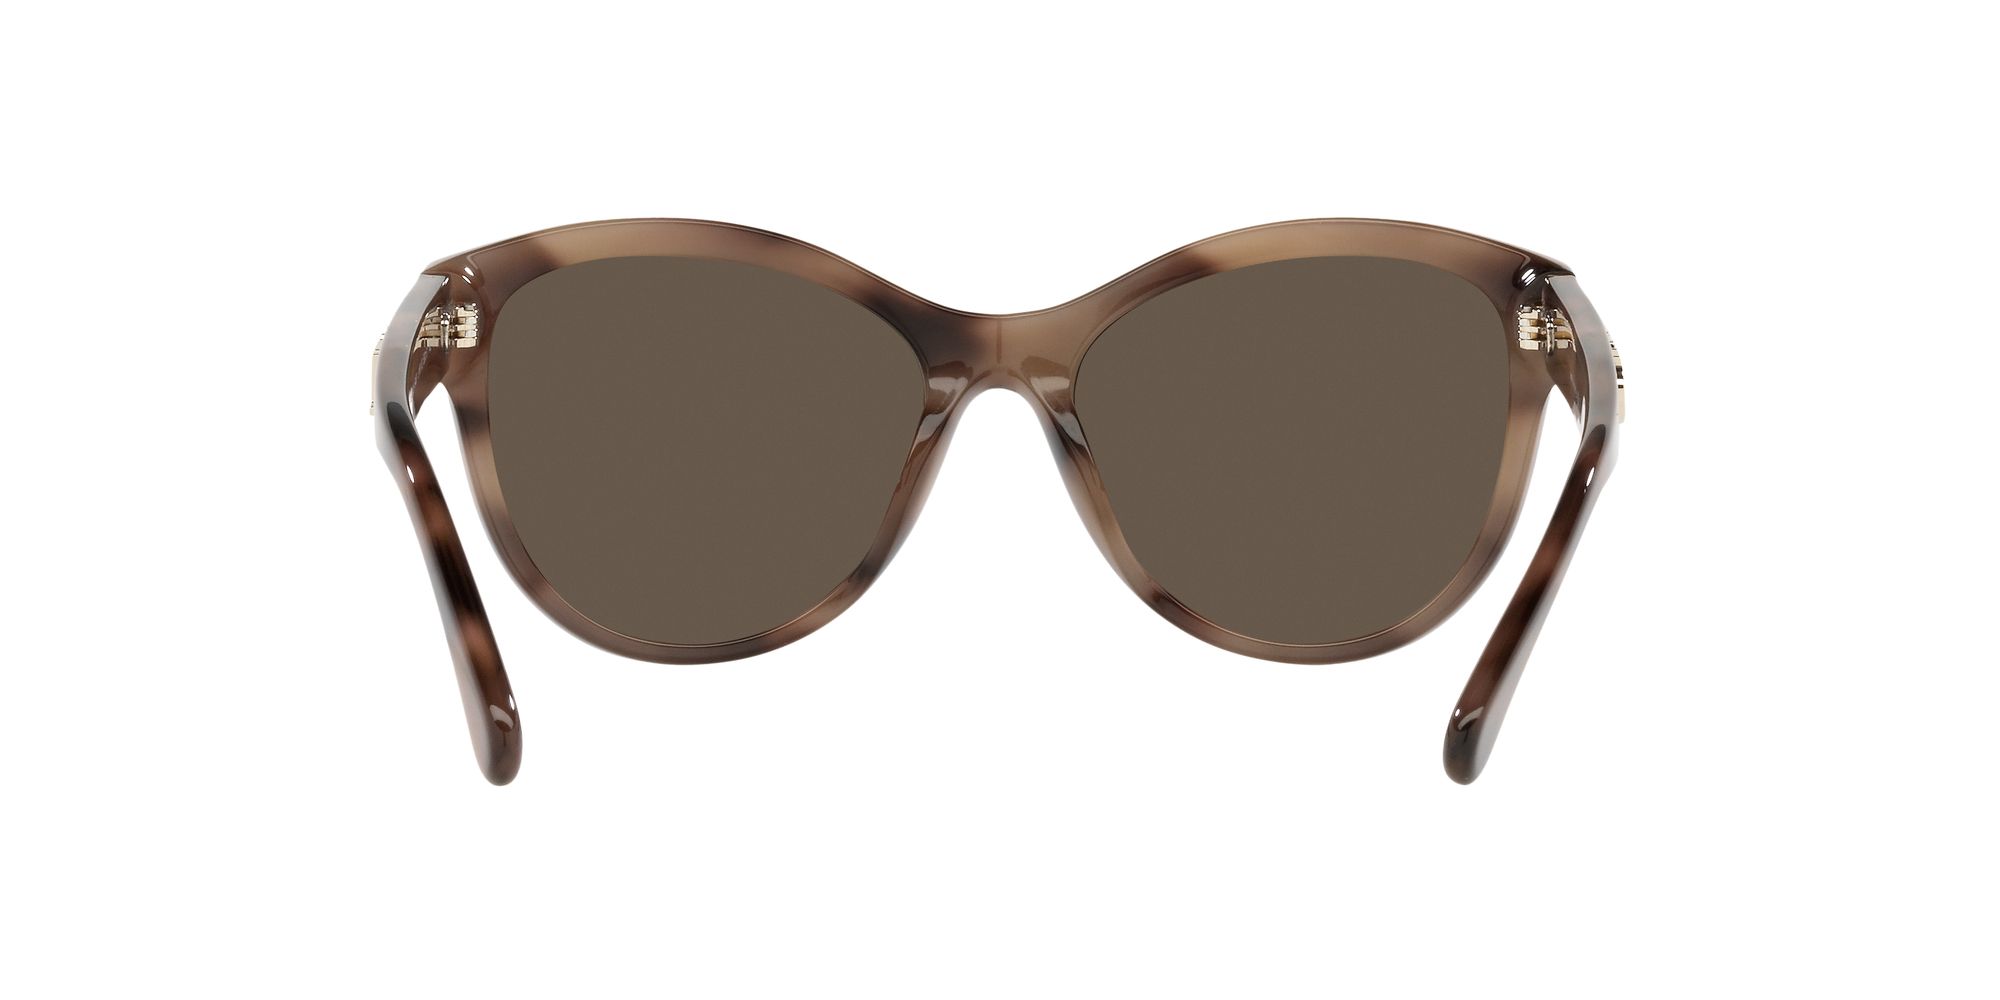 Chanel sunglasses rhinestone - Gem